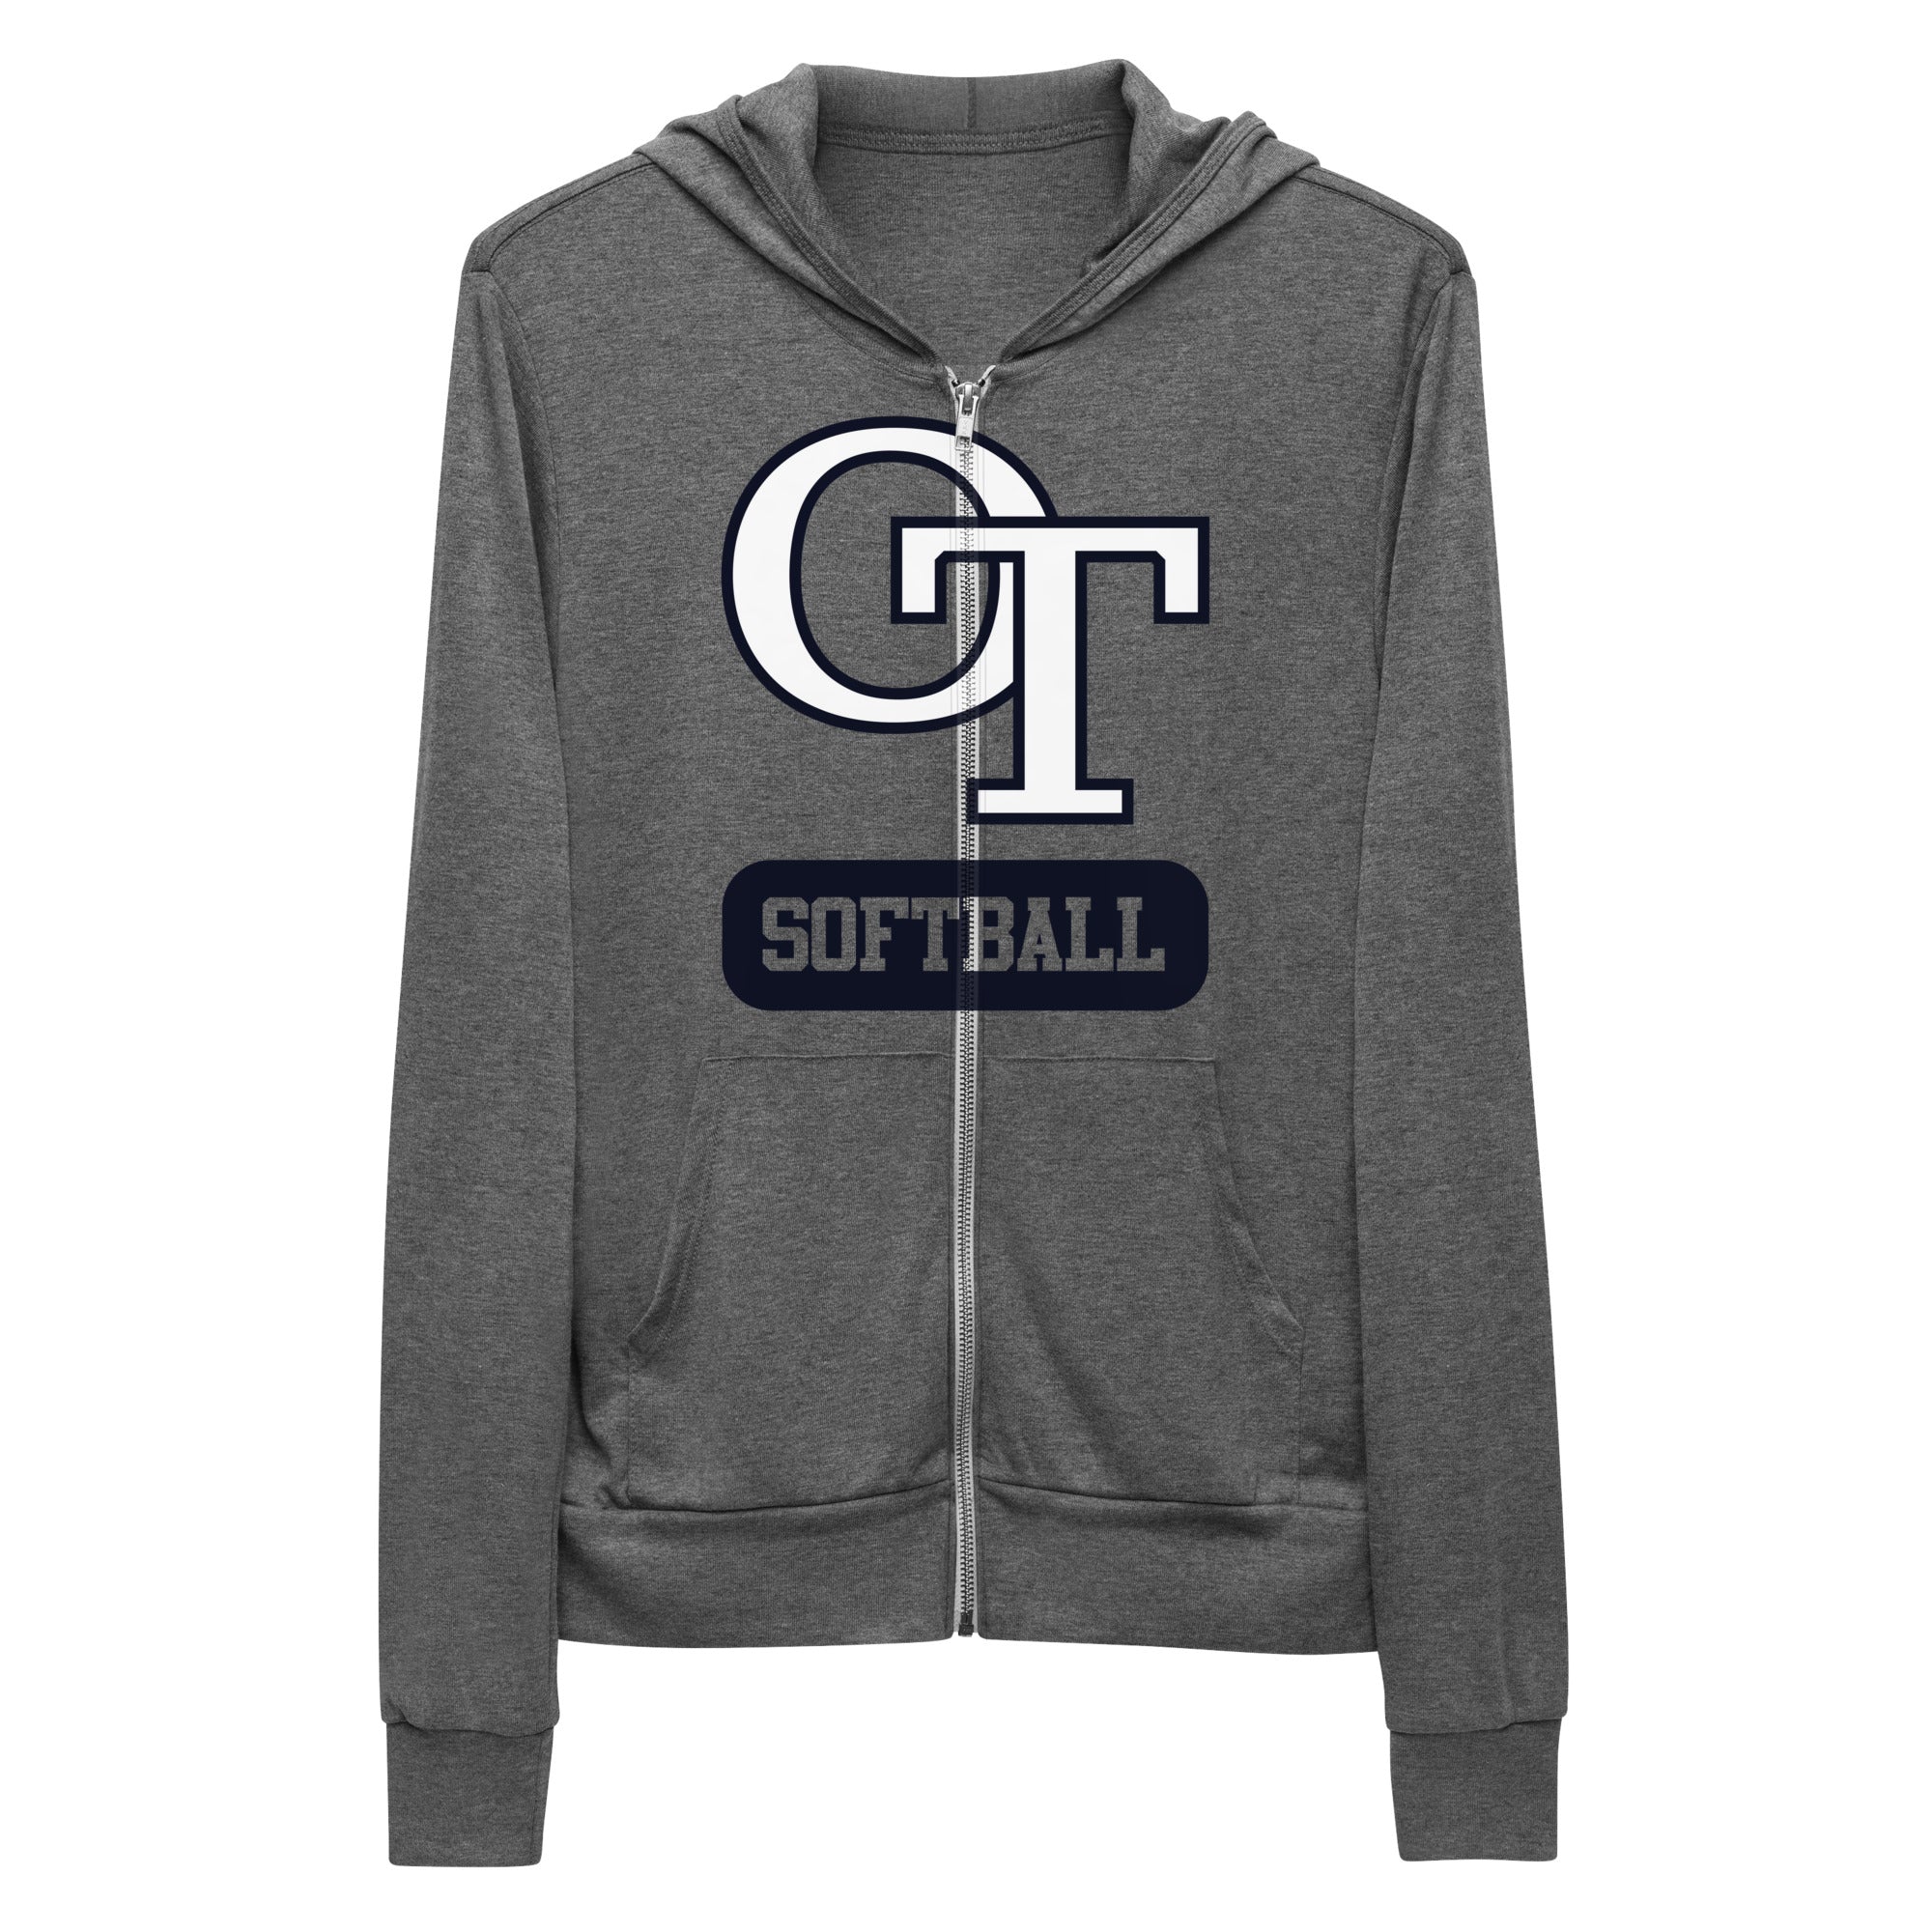 OT Baseball and Softball League - Softball Unisex zip hoodie